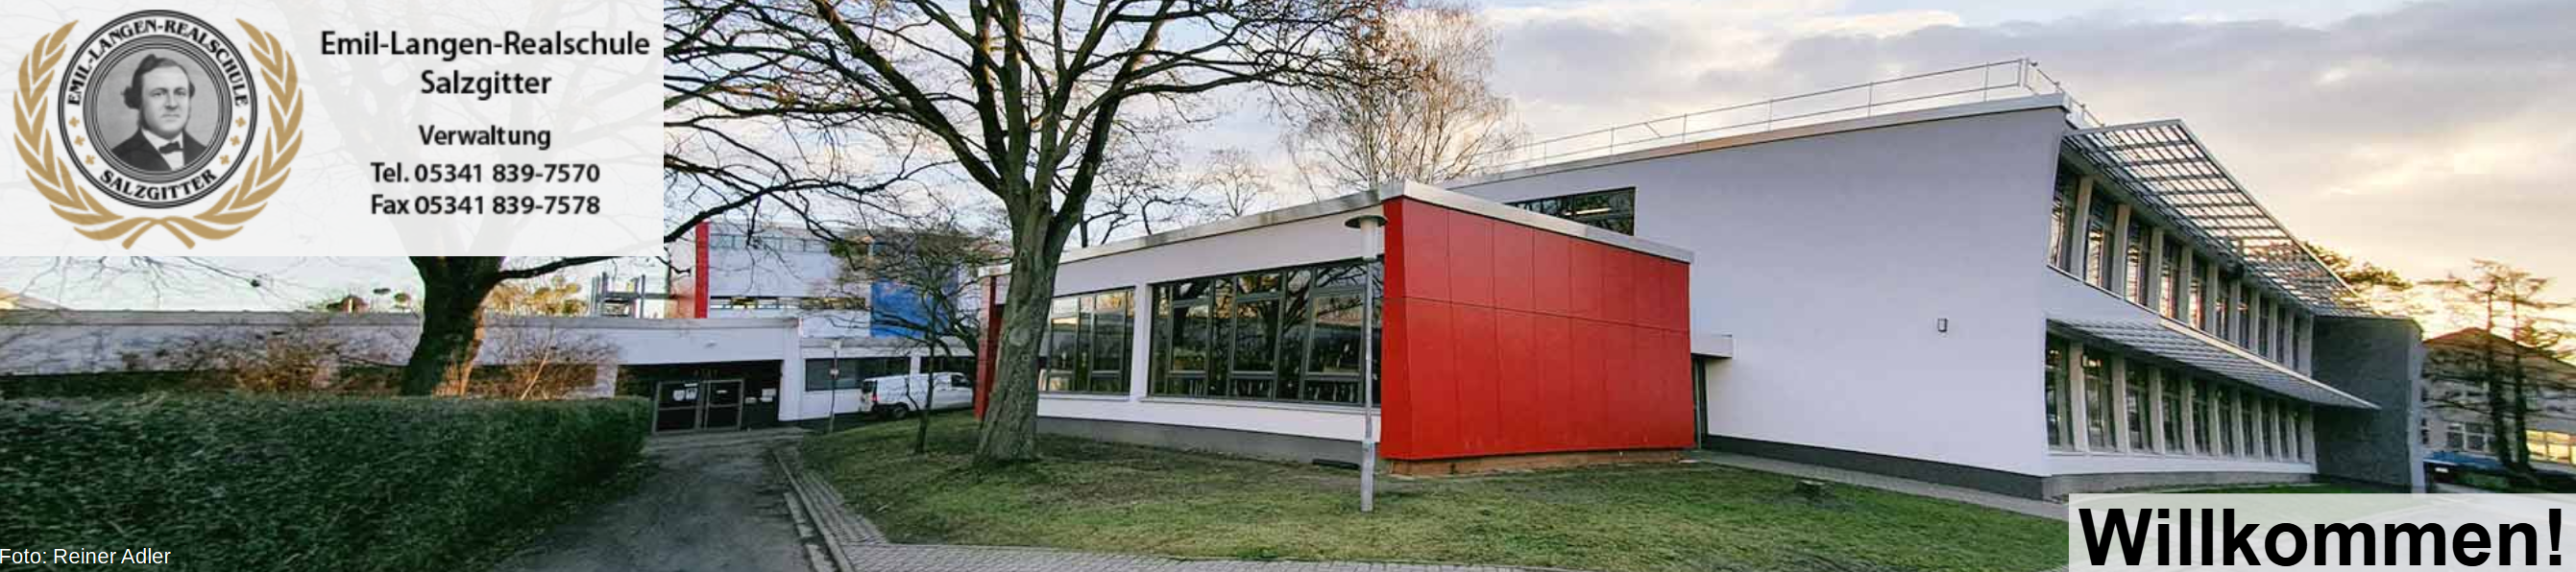 Emil-Langen-Realschule Salzgitter